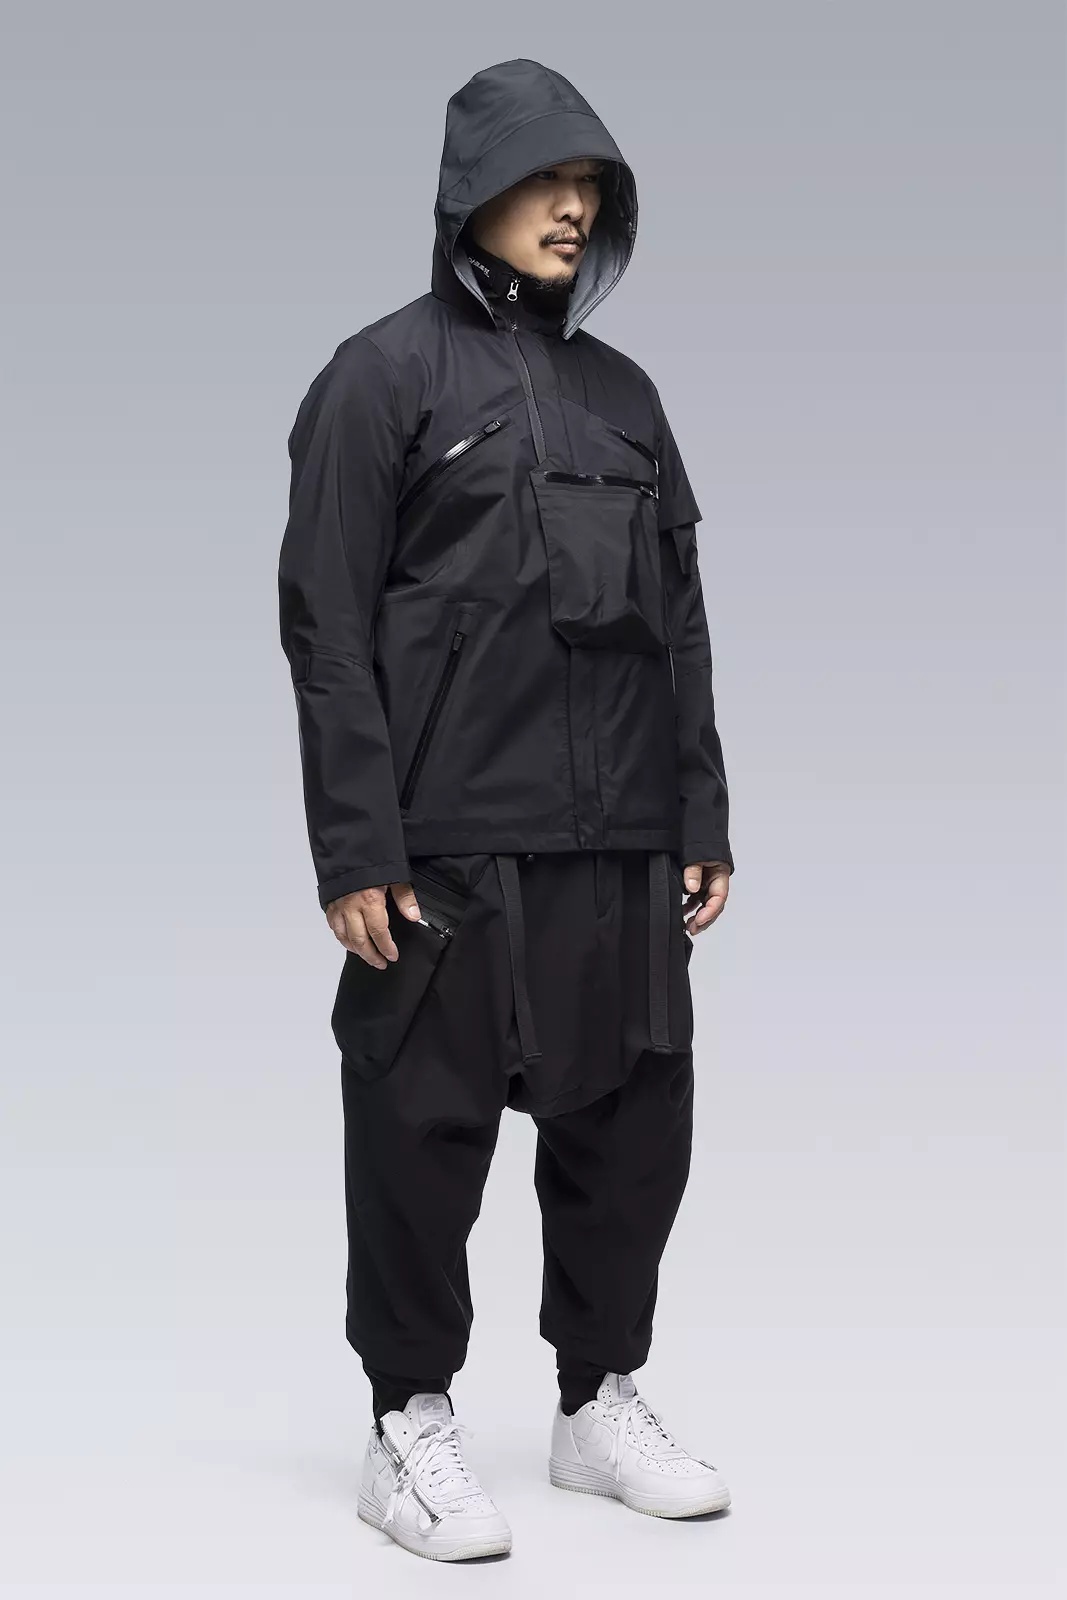 J1A-GTKR-BKS KR EX 3L Gore-Tex® Pro Interops Jacket Black with size 5 WR zippers in gloss black - 2